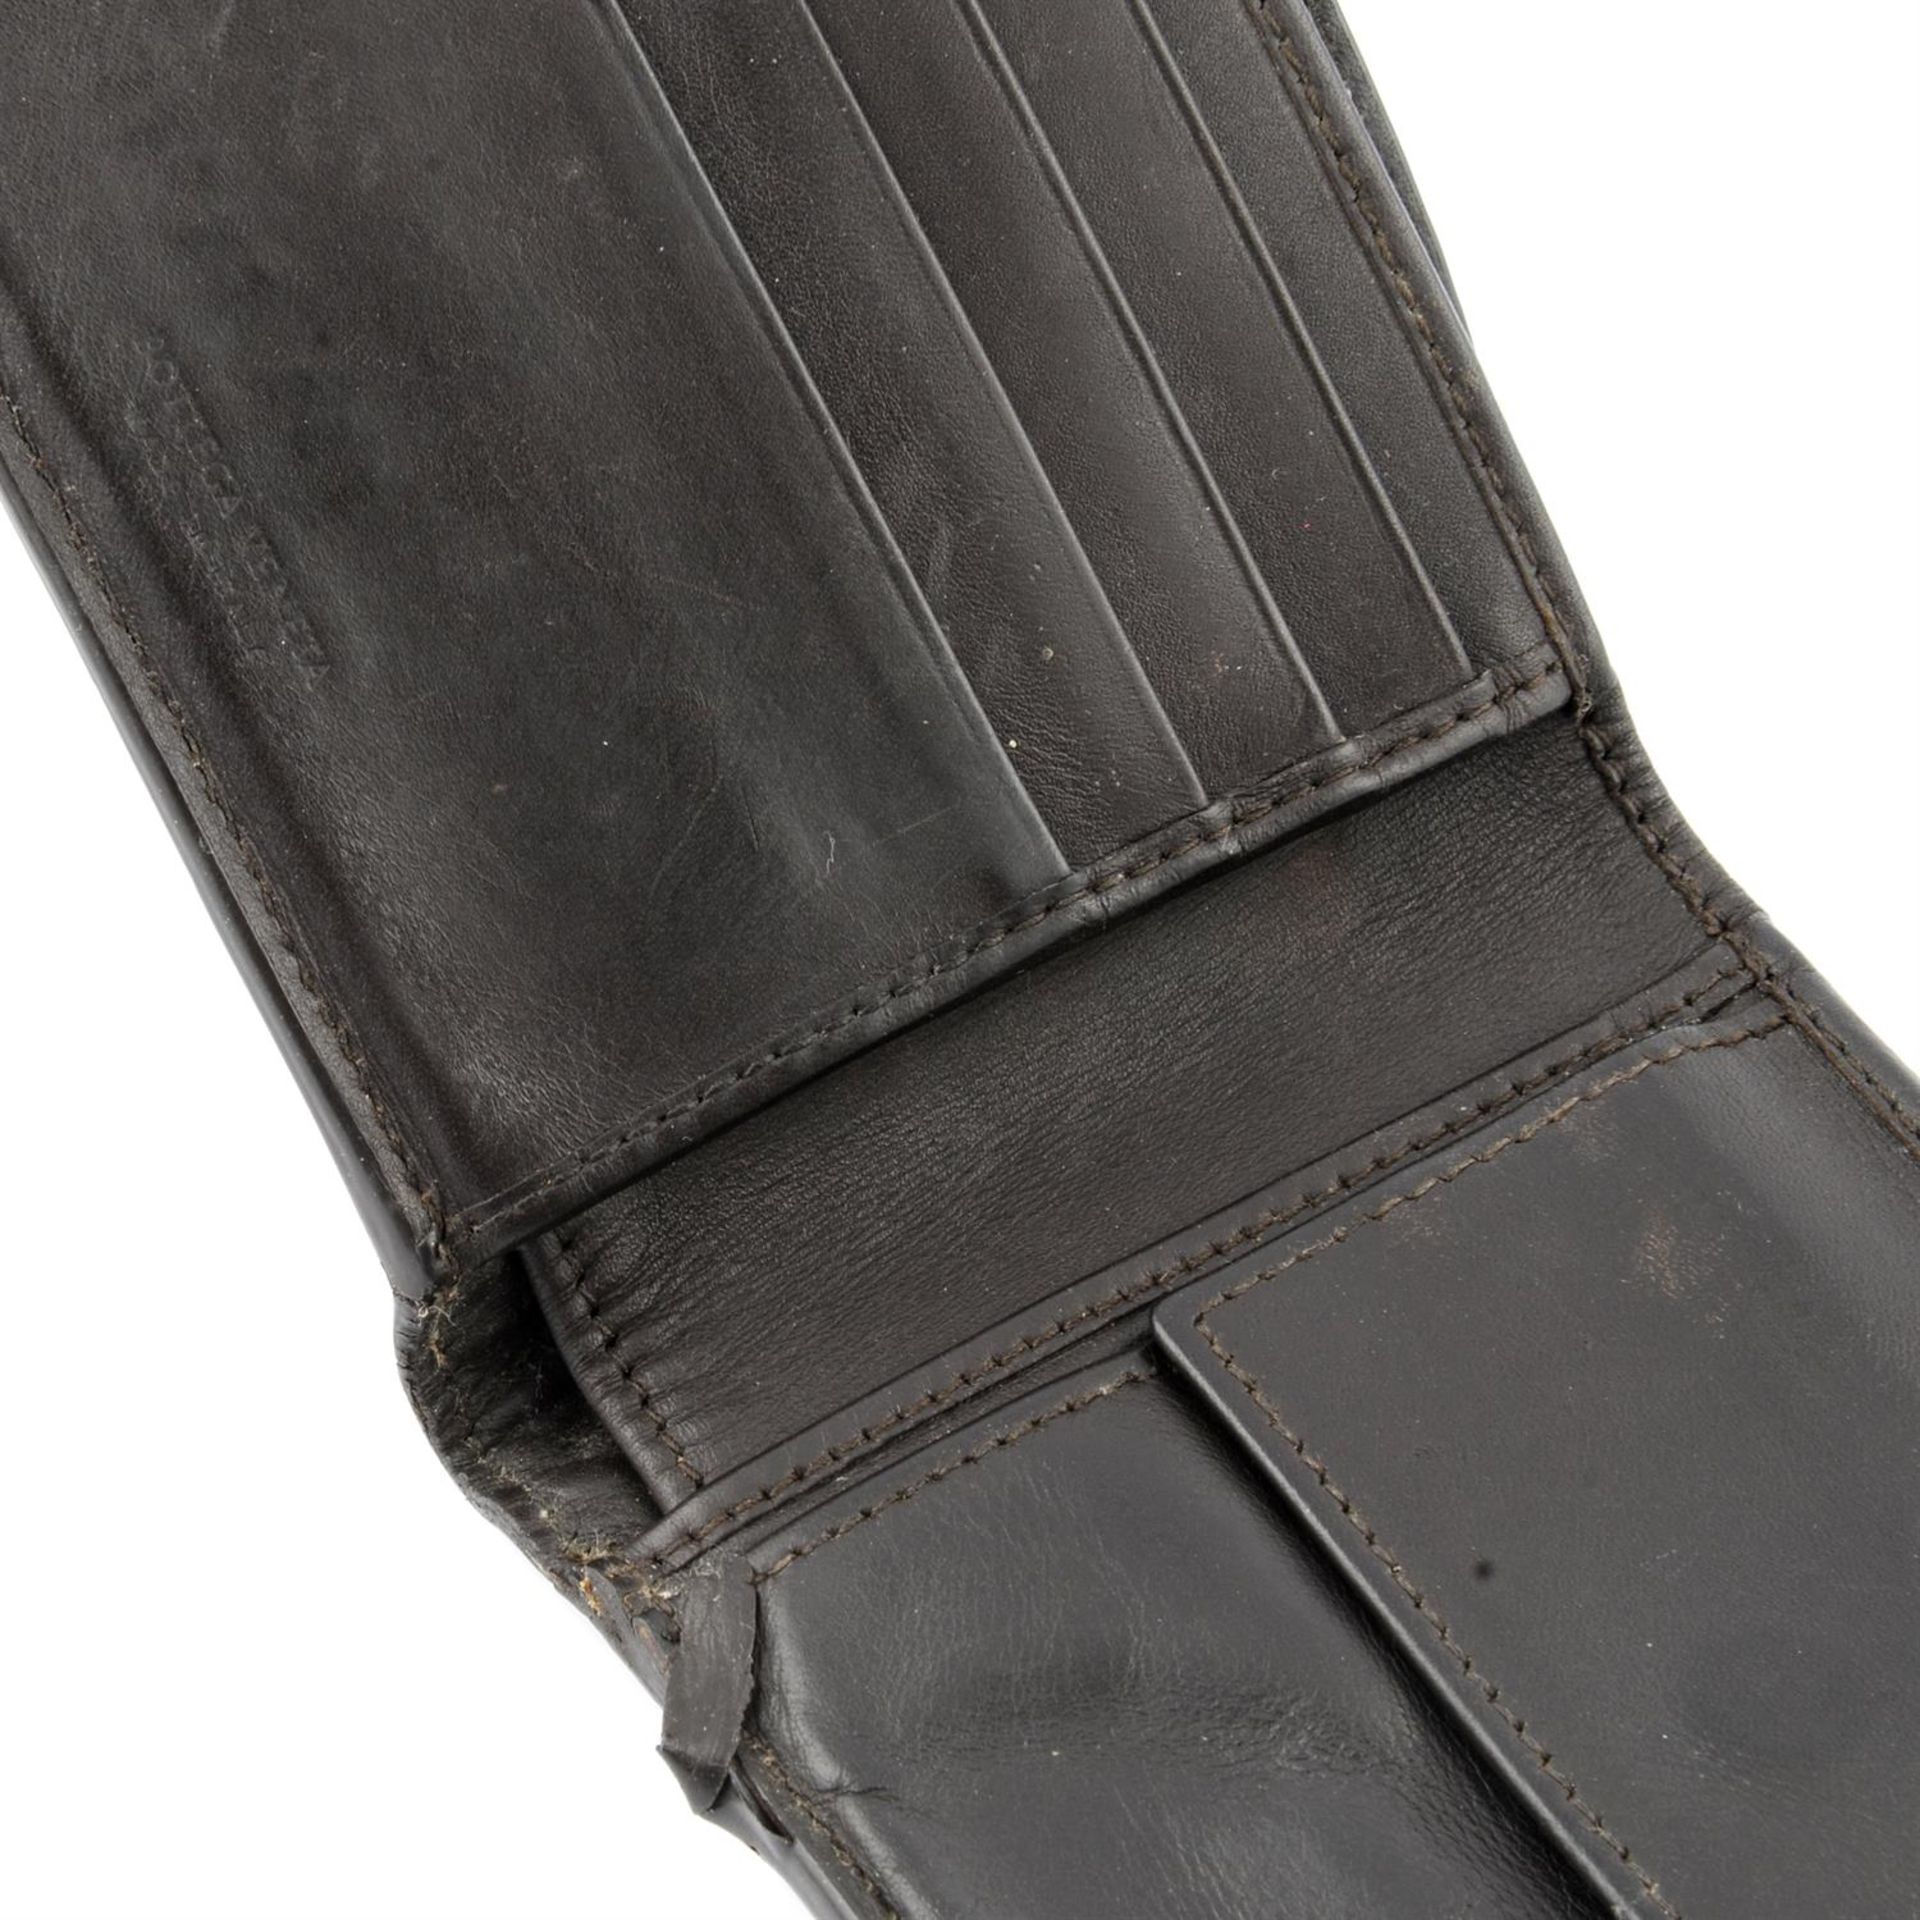 BOTTEGA VENETA - a Intrecciato leather Bifold wallet. - Image 3 of 4